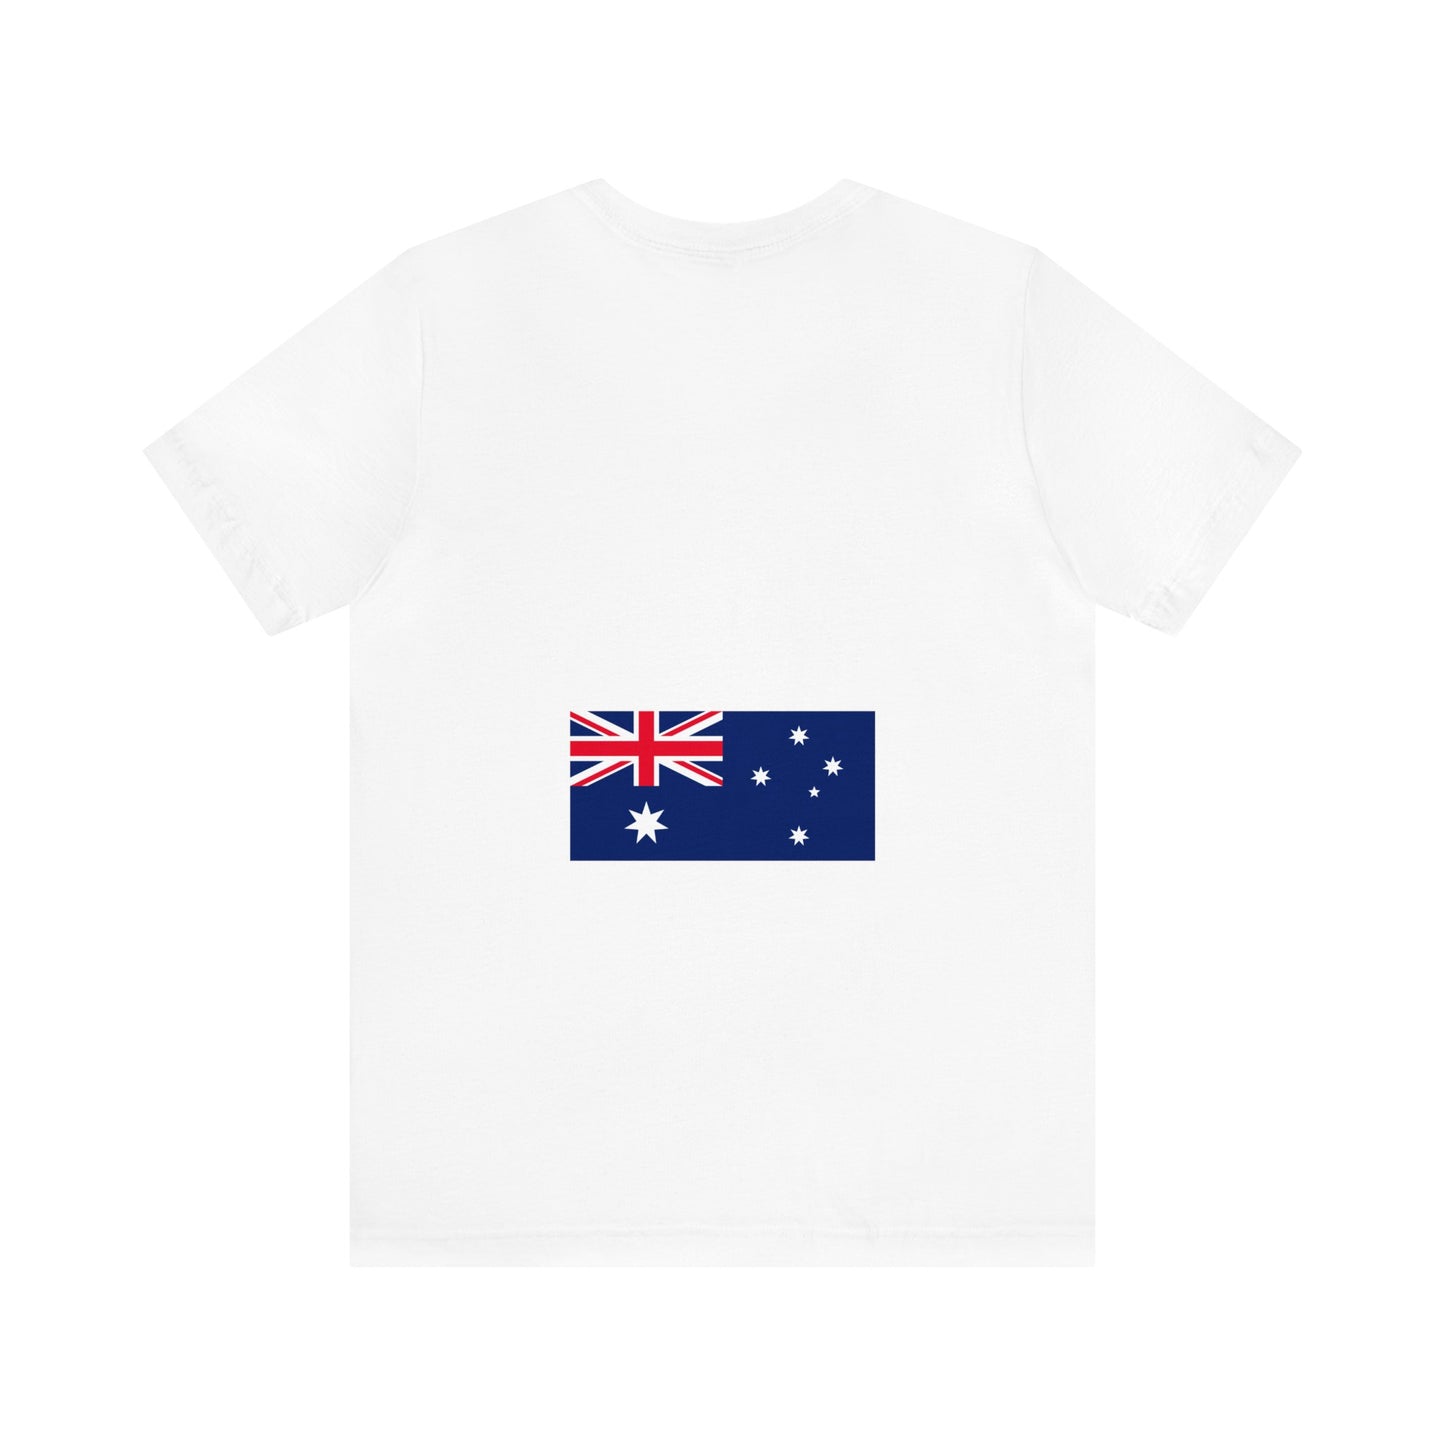 Unisex Melbourne Track T-Shirt